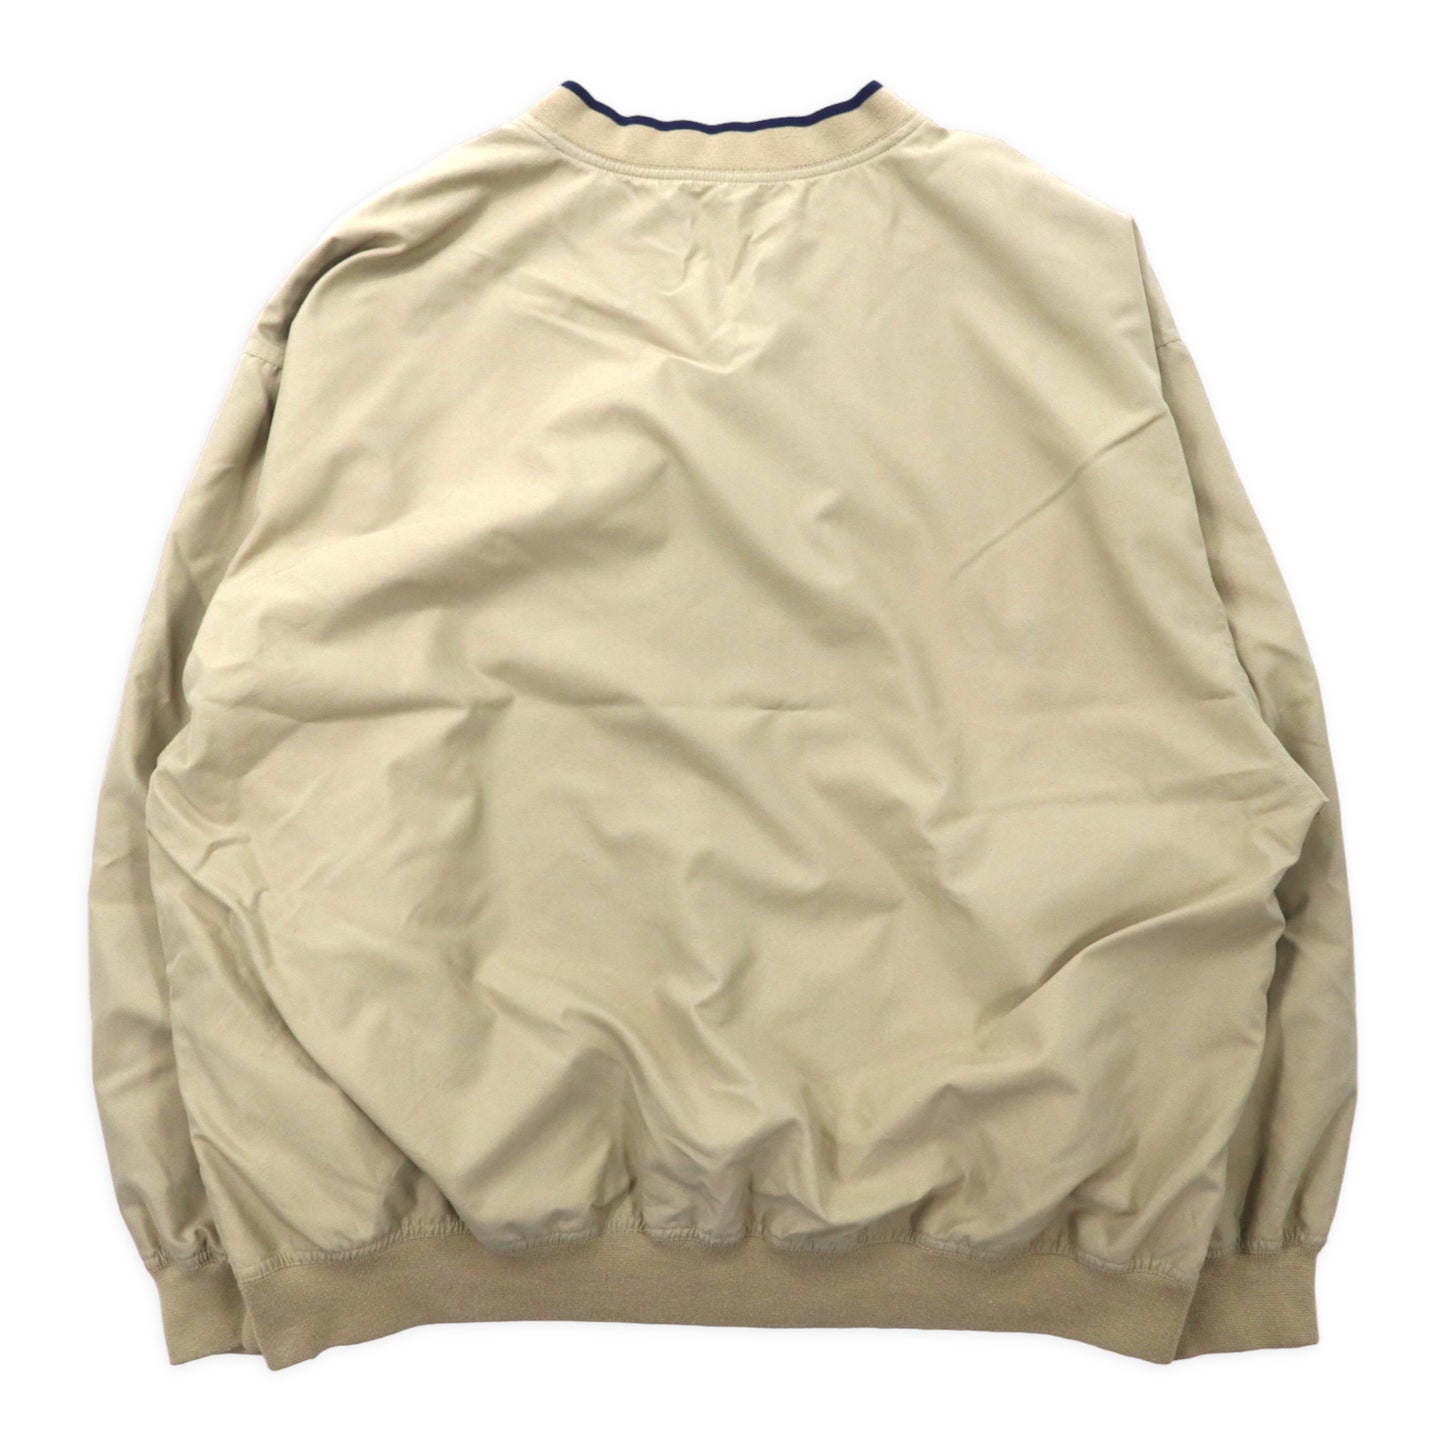 WHITE BEAR CLOTHING Co. ピステ プルオーバー ナイロンジャケット 2XL ポリエステル メッシュライナー US企業 刺繍 ビッグサイズ